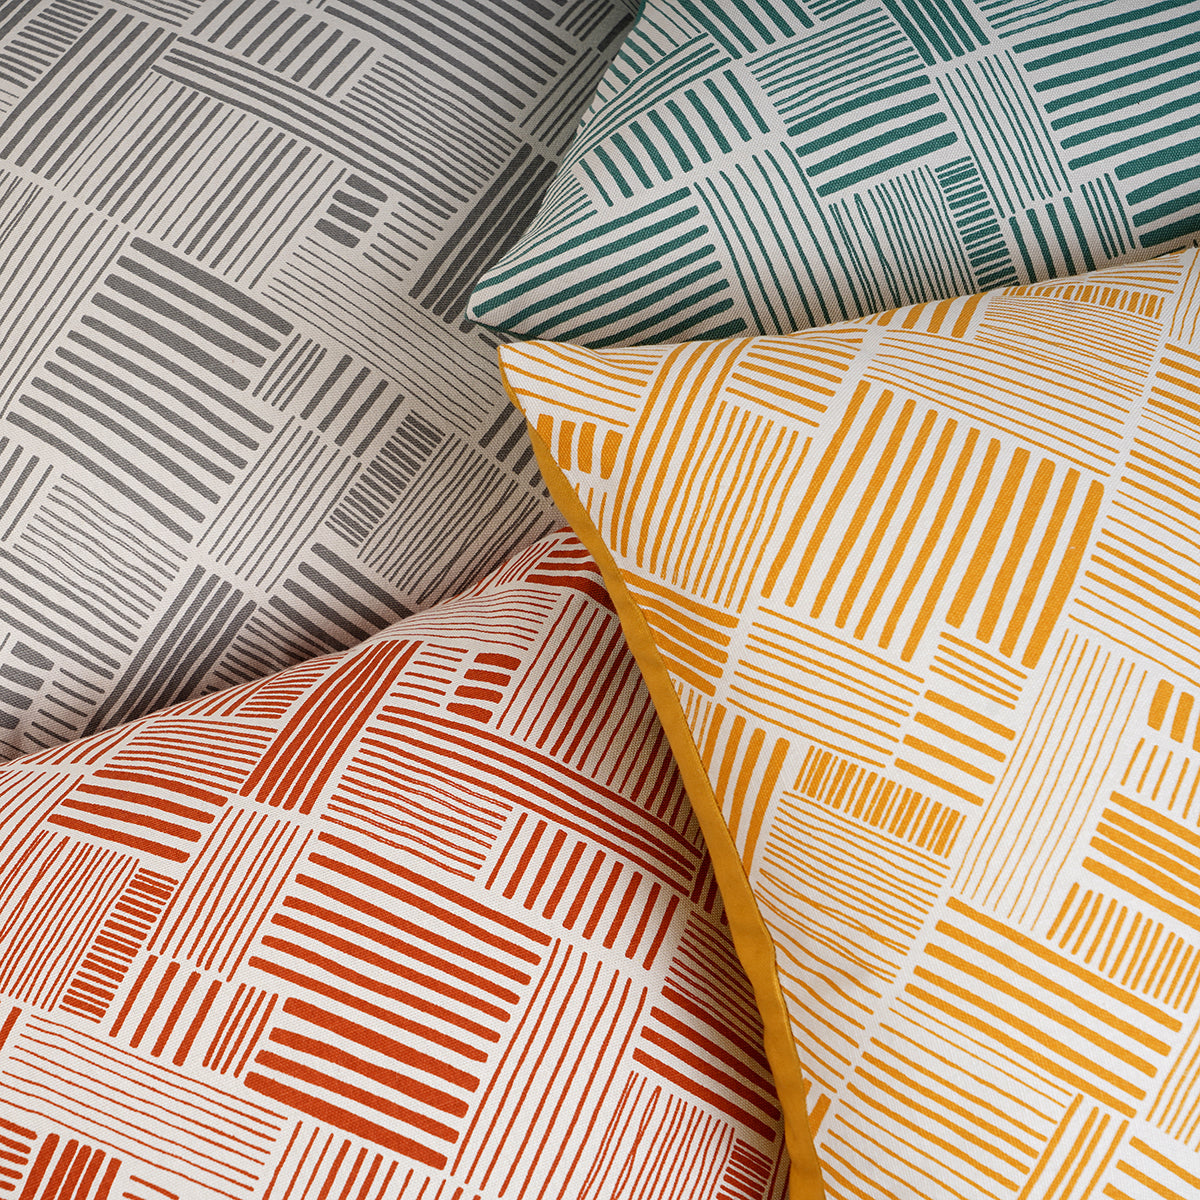 MODERN RETRO - Mustard Yellow throw pillow cover, geometrical print, cotton pillow, sizes available